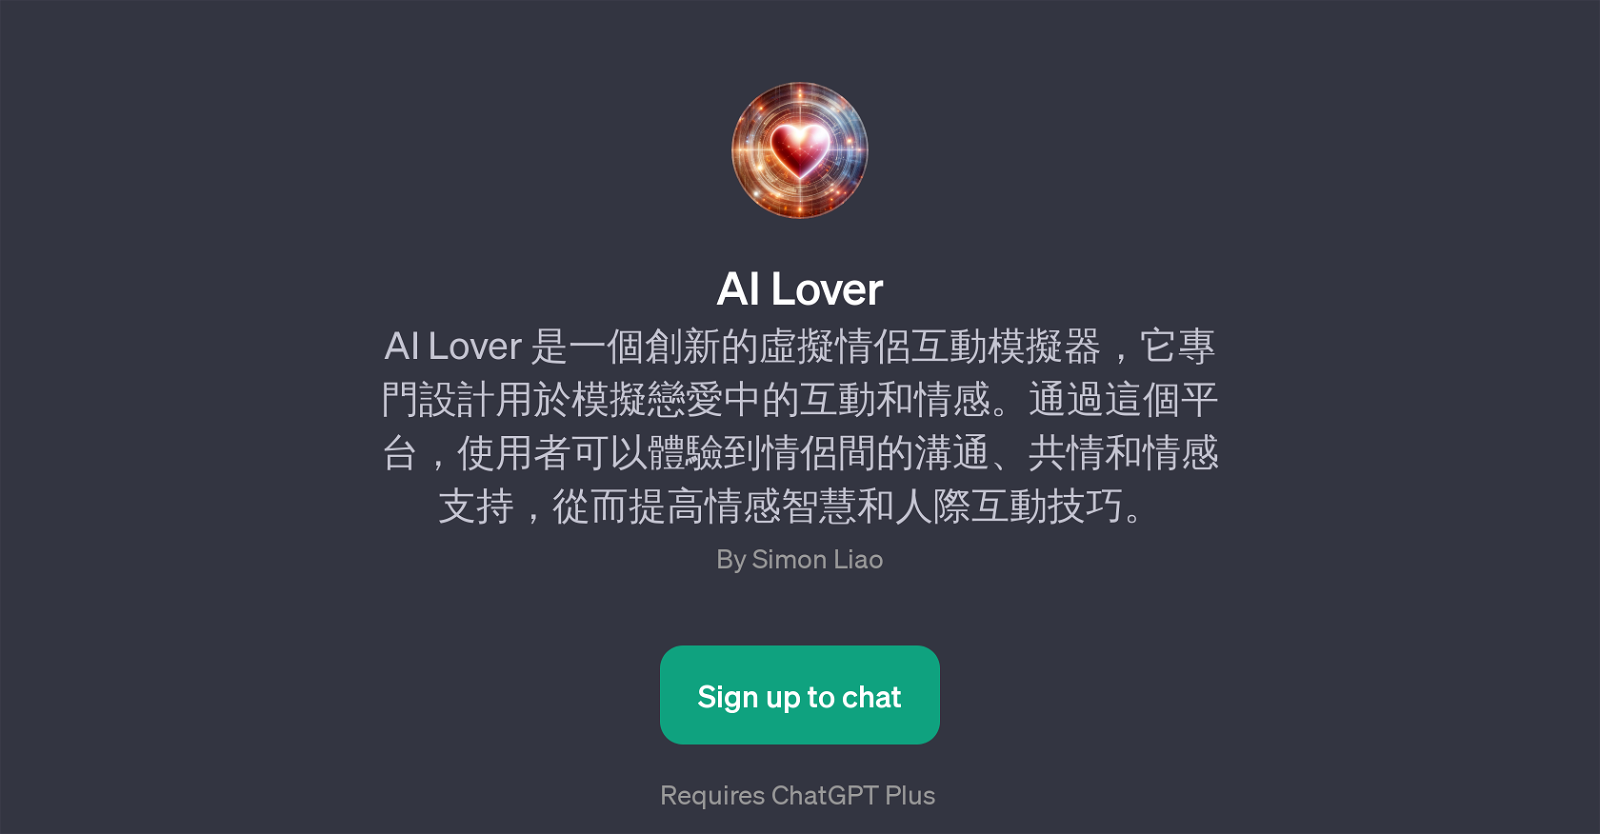 AI Lover website